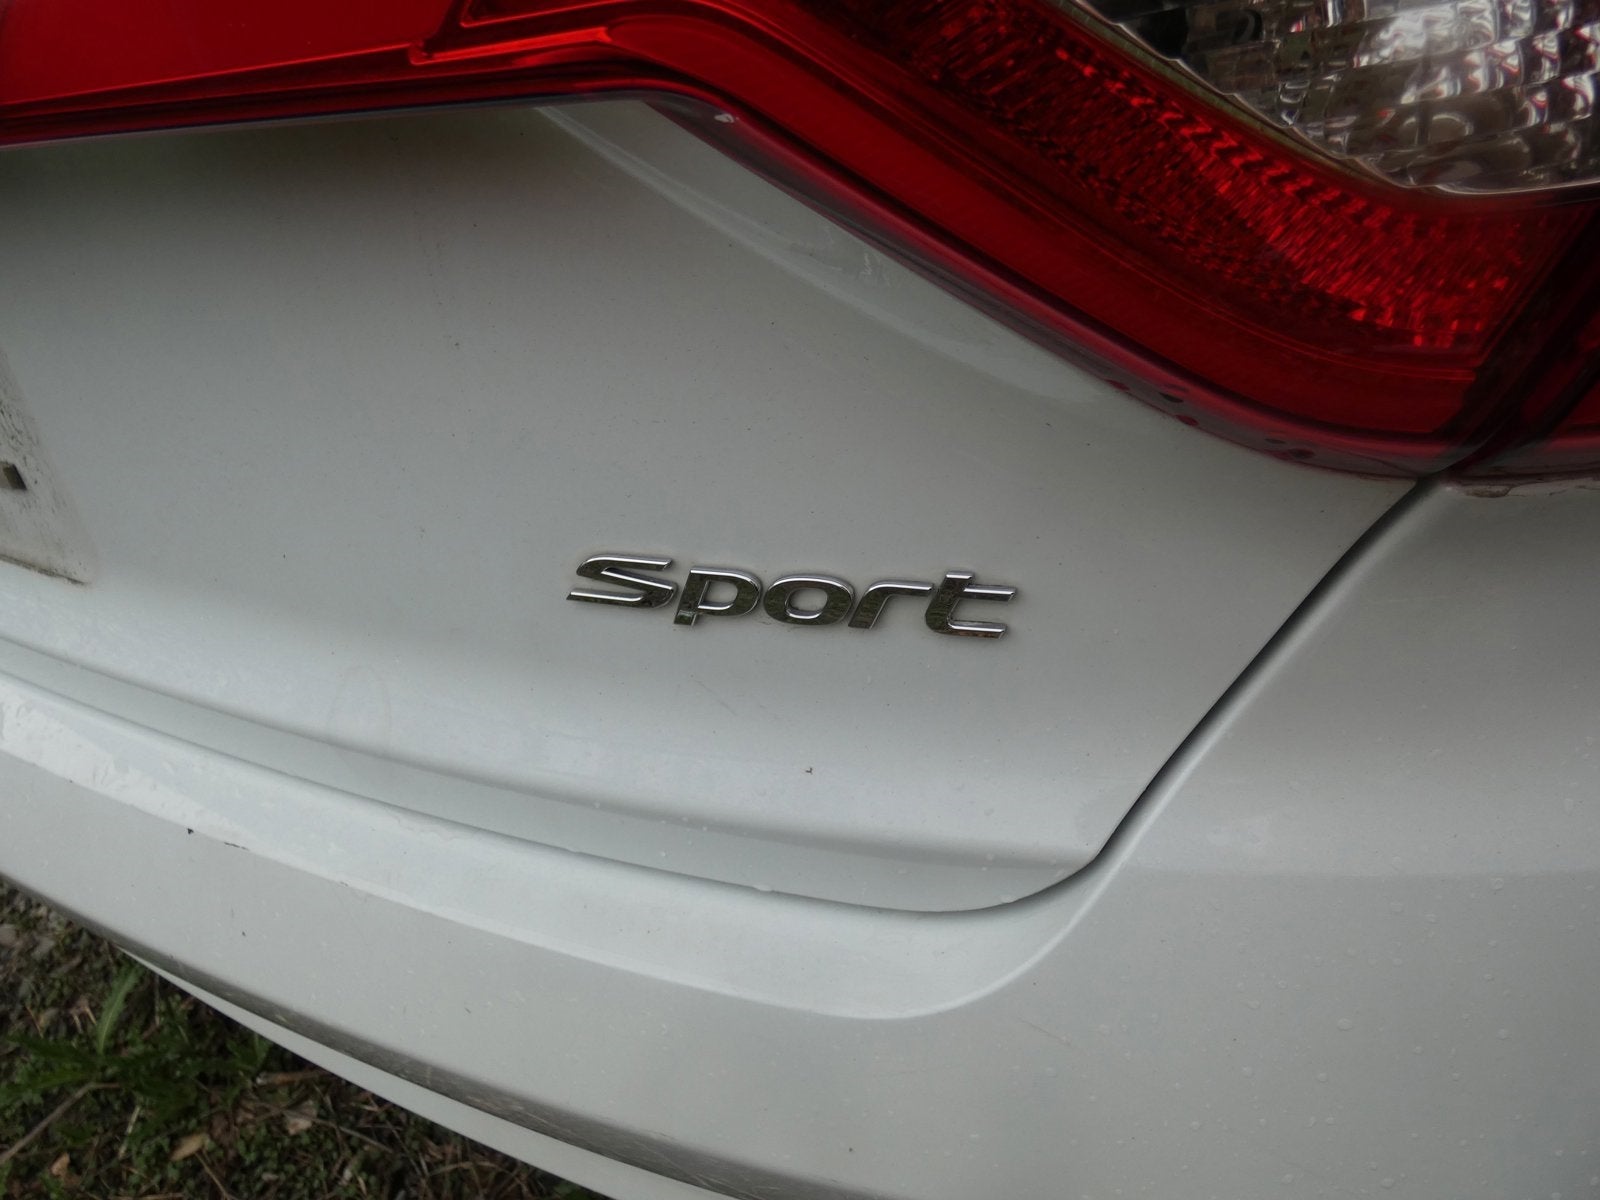 2016 Hyundai Sonata 2.4L Sport